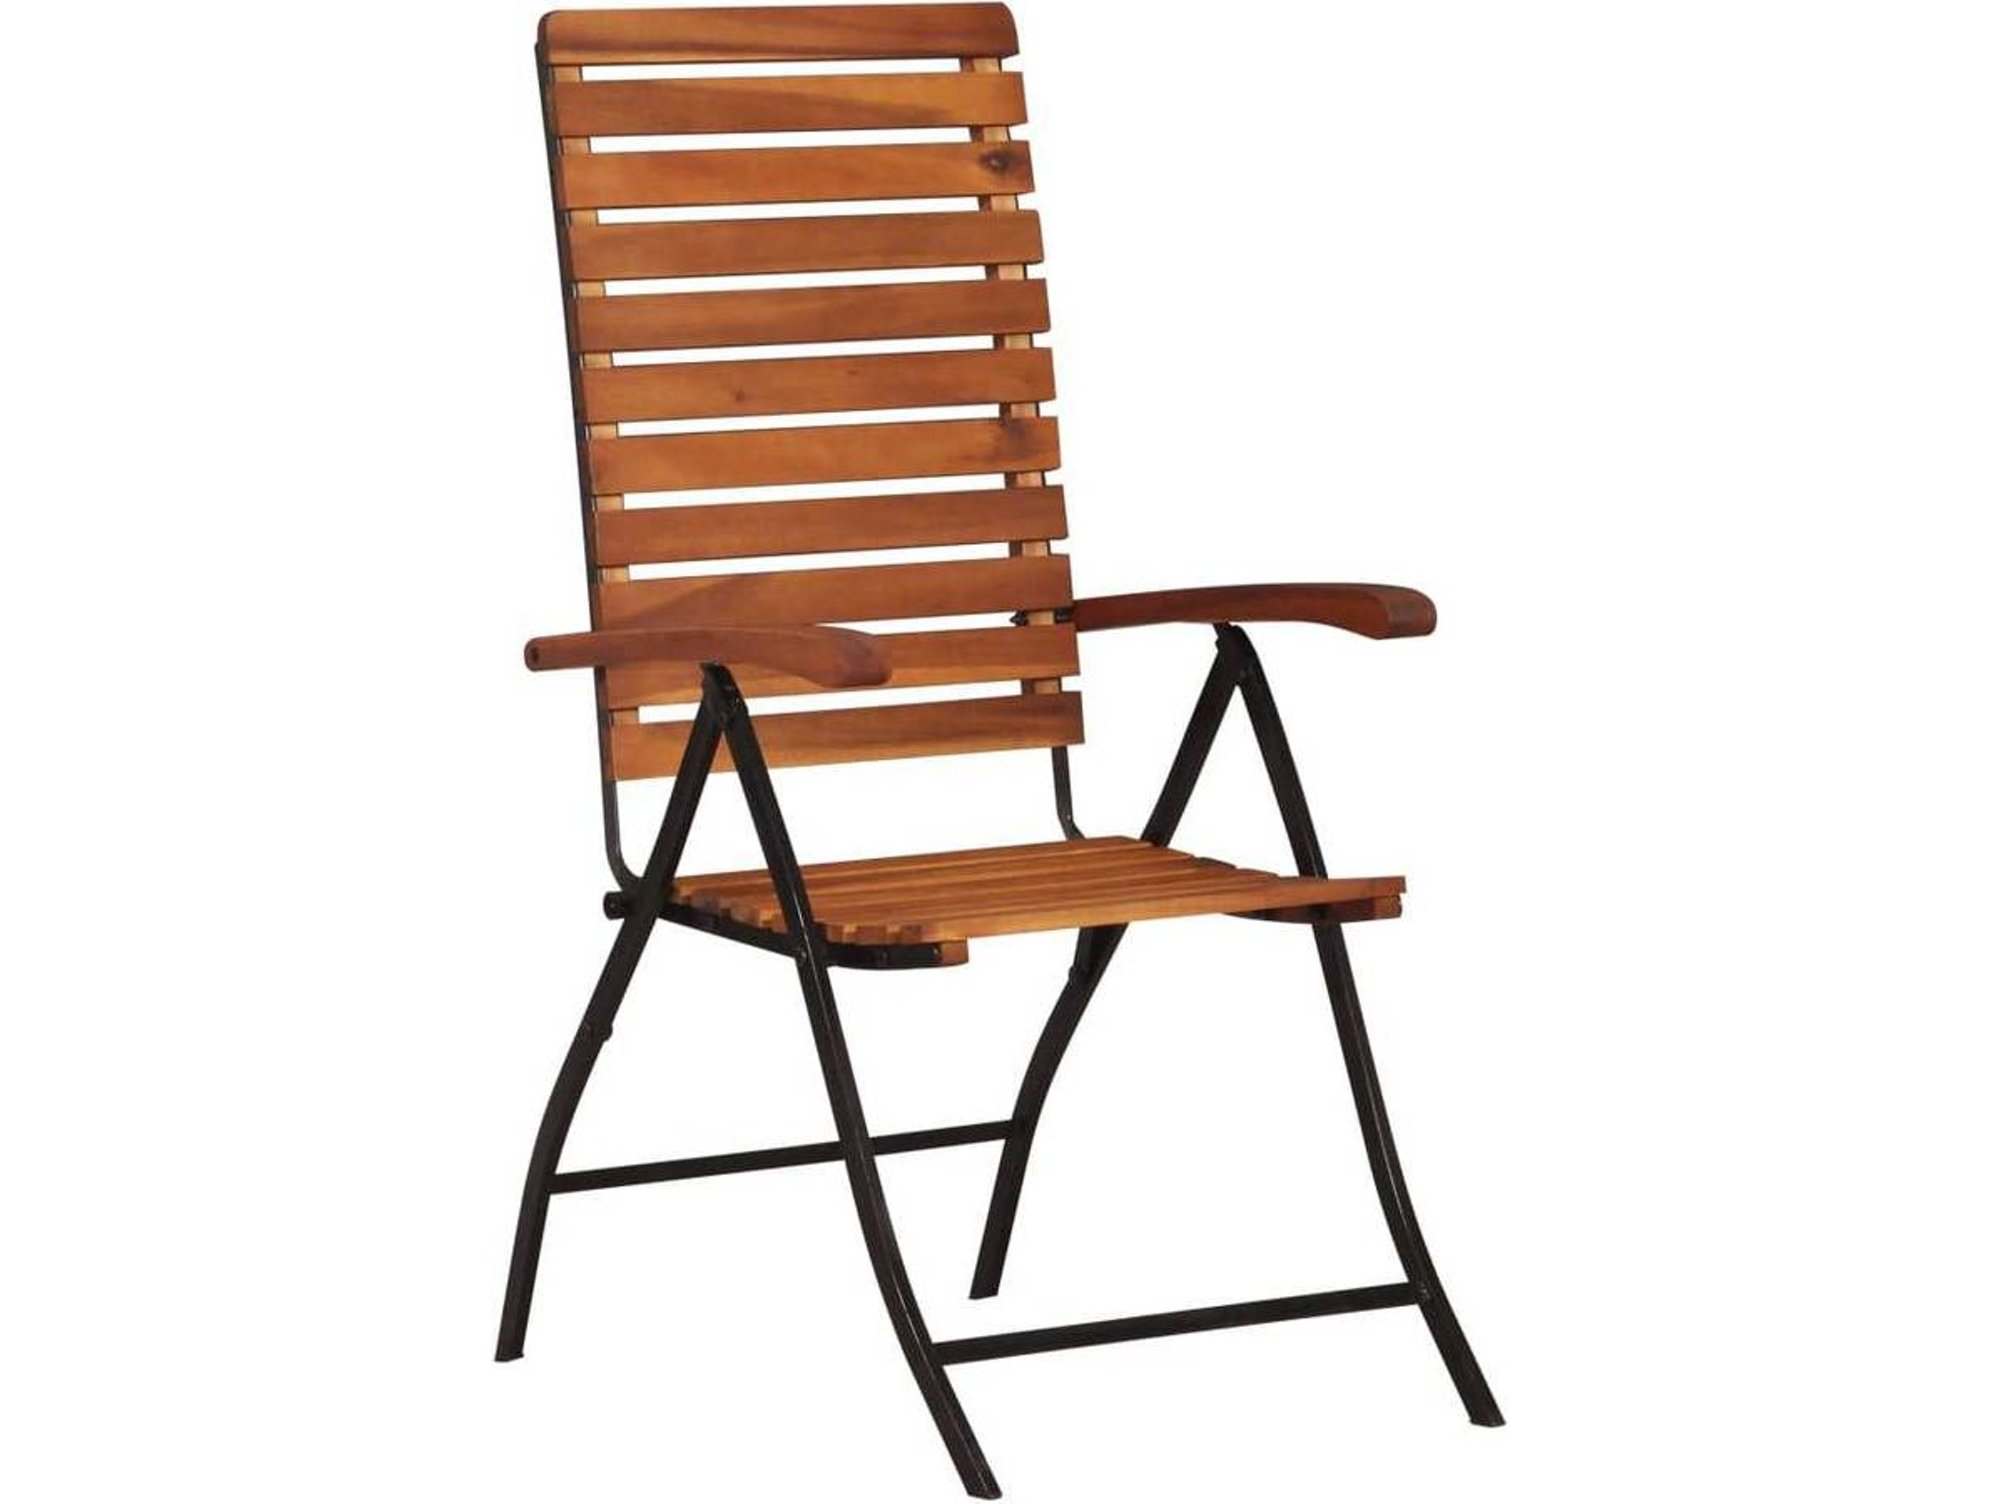 Vidaxl 2x Madera acacia maciza sillas reclinables asientos terraza patio porche mobiliario muebles decoración exterior casa hogar conjunto 2 44391